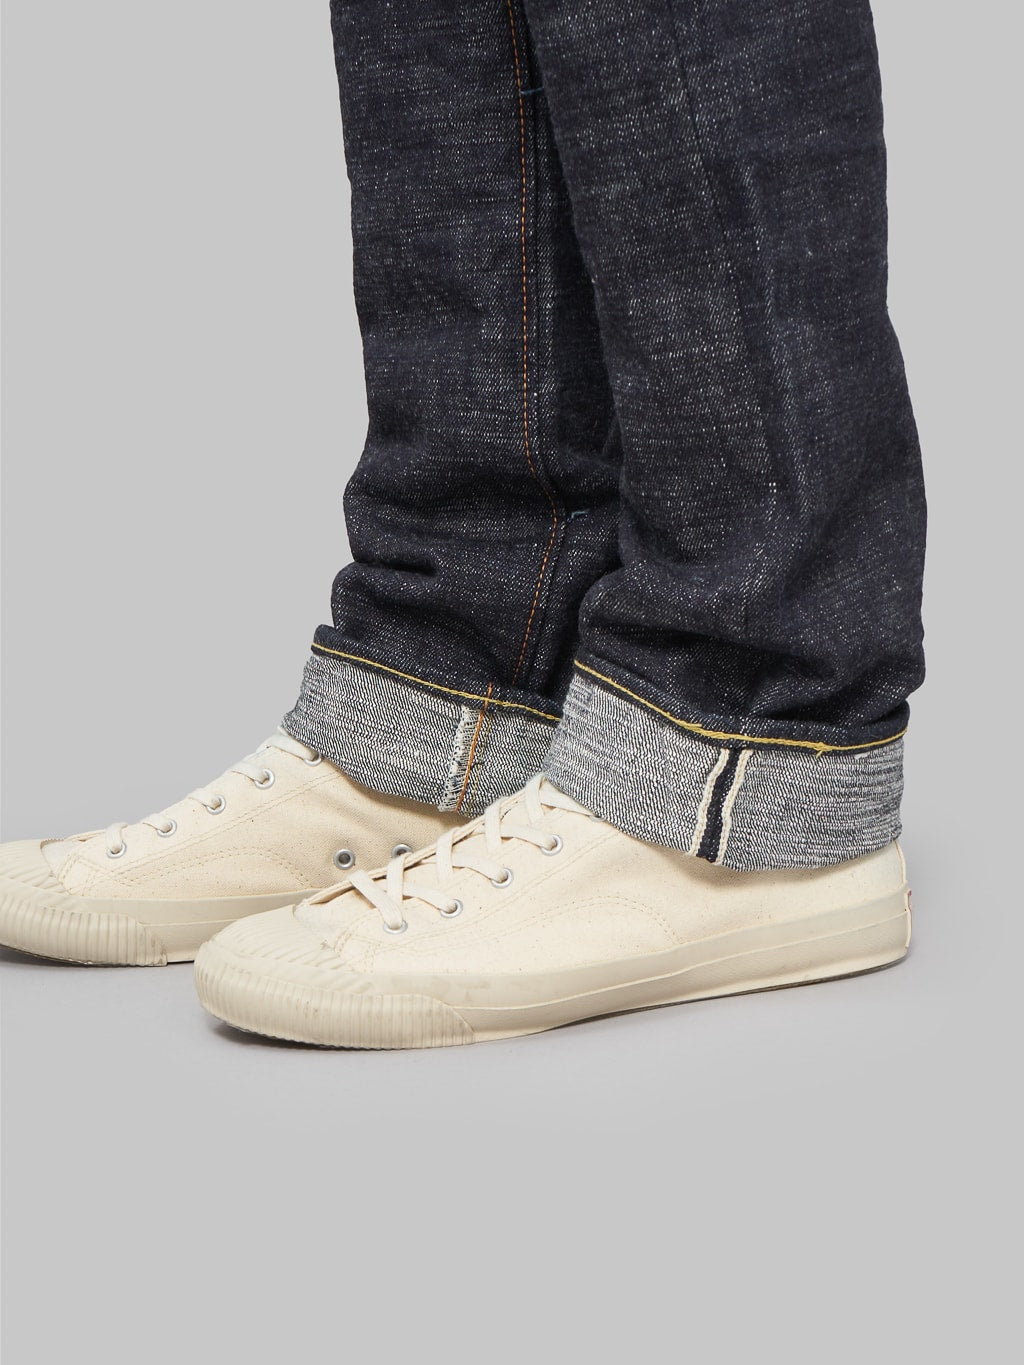 The Strike Gold 7109 Ultra Slubby Slim Tapered Jeans closeup